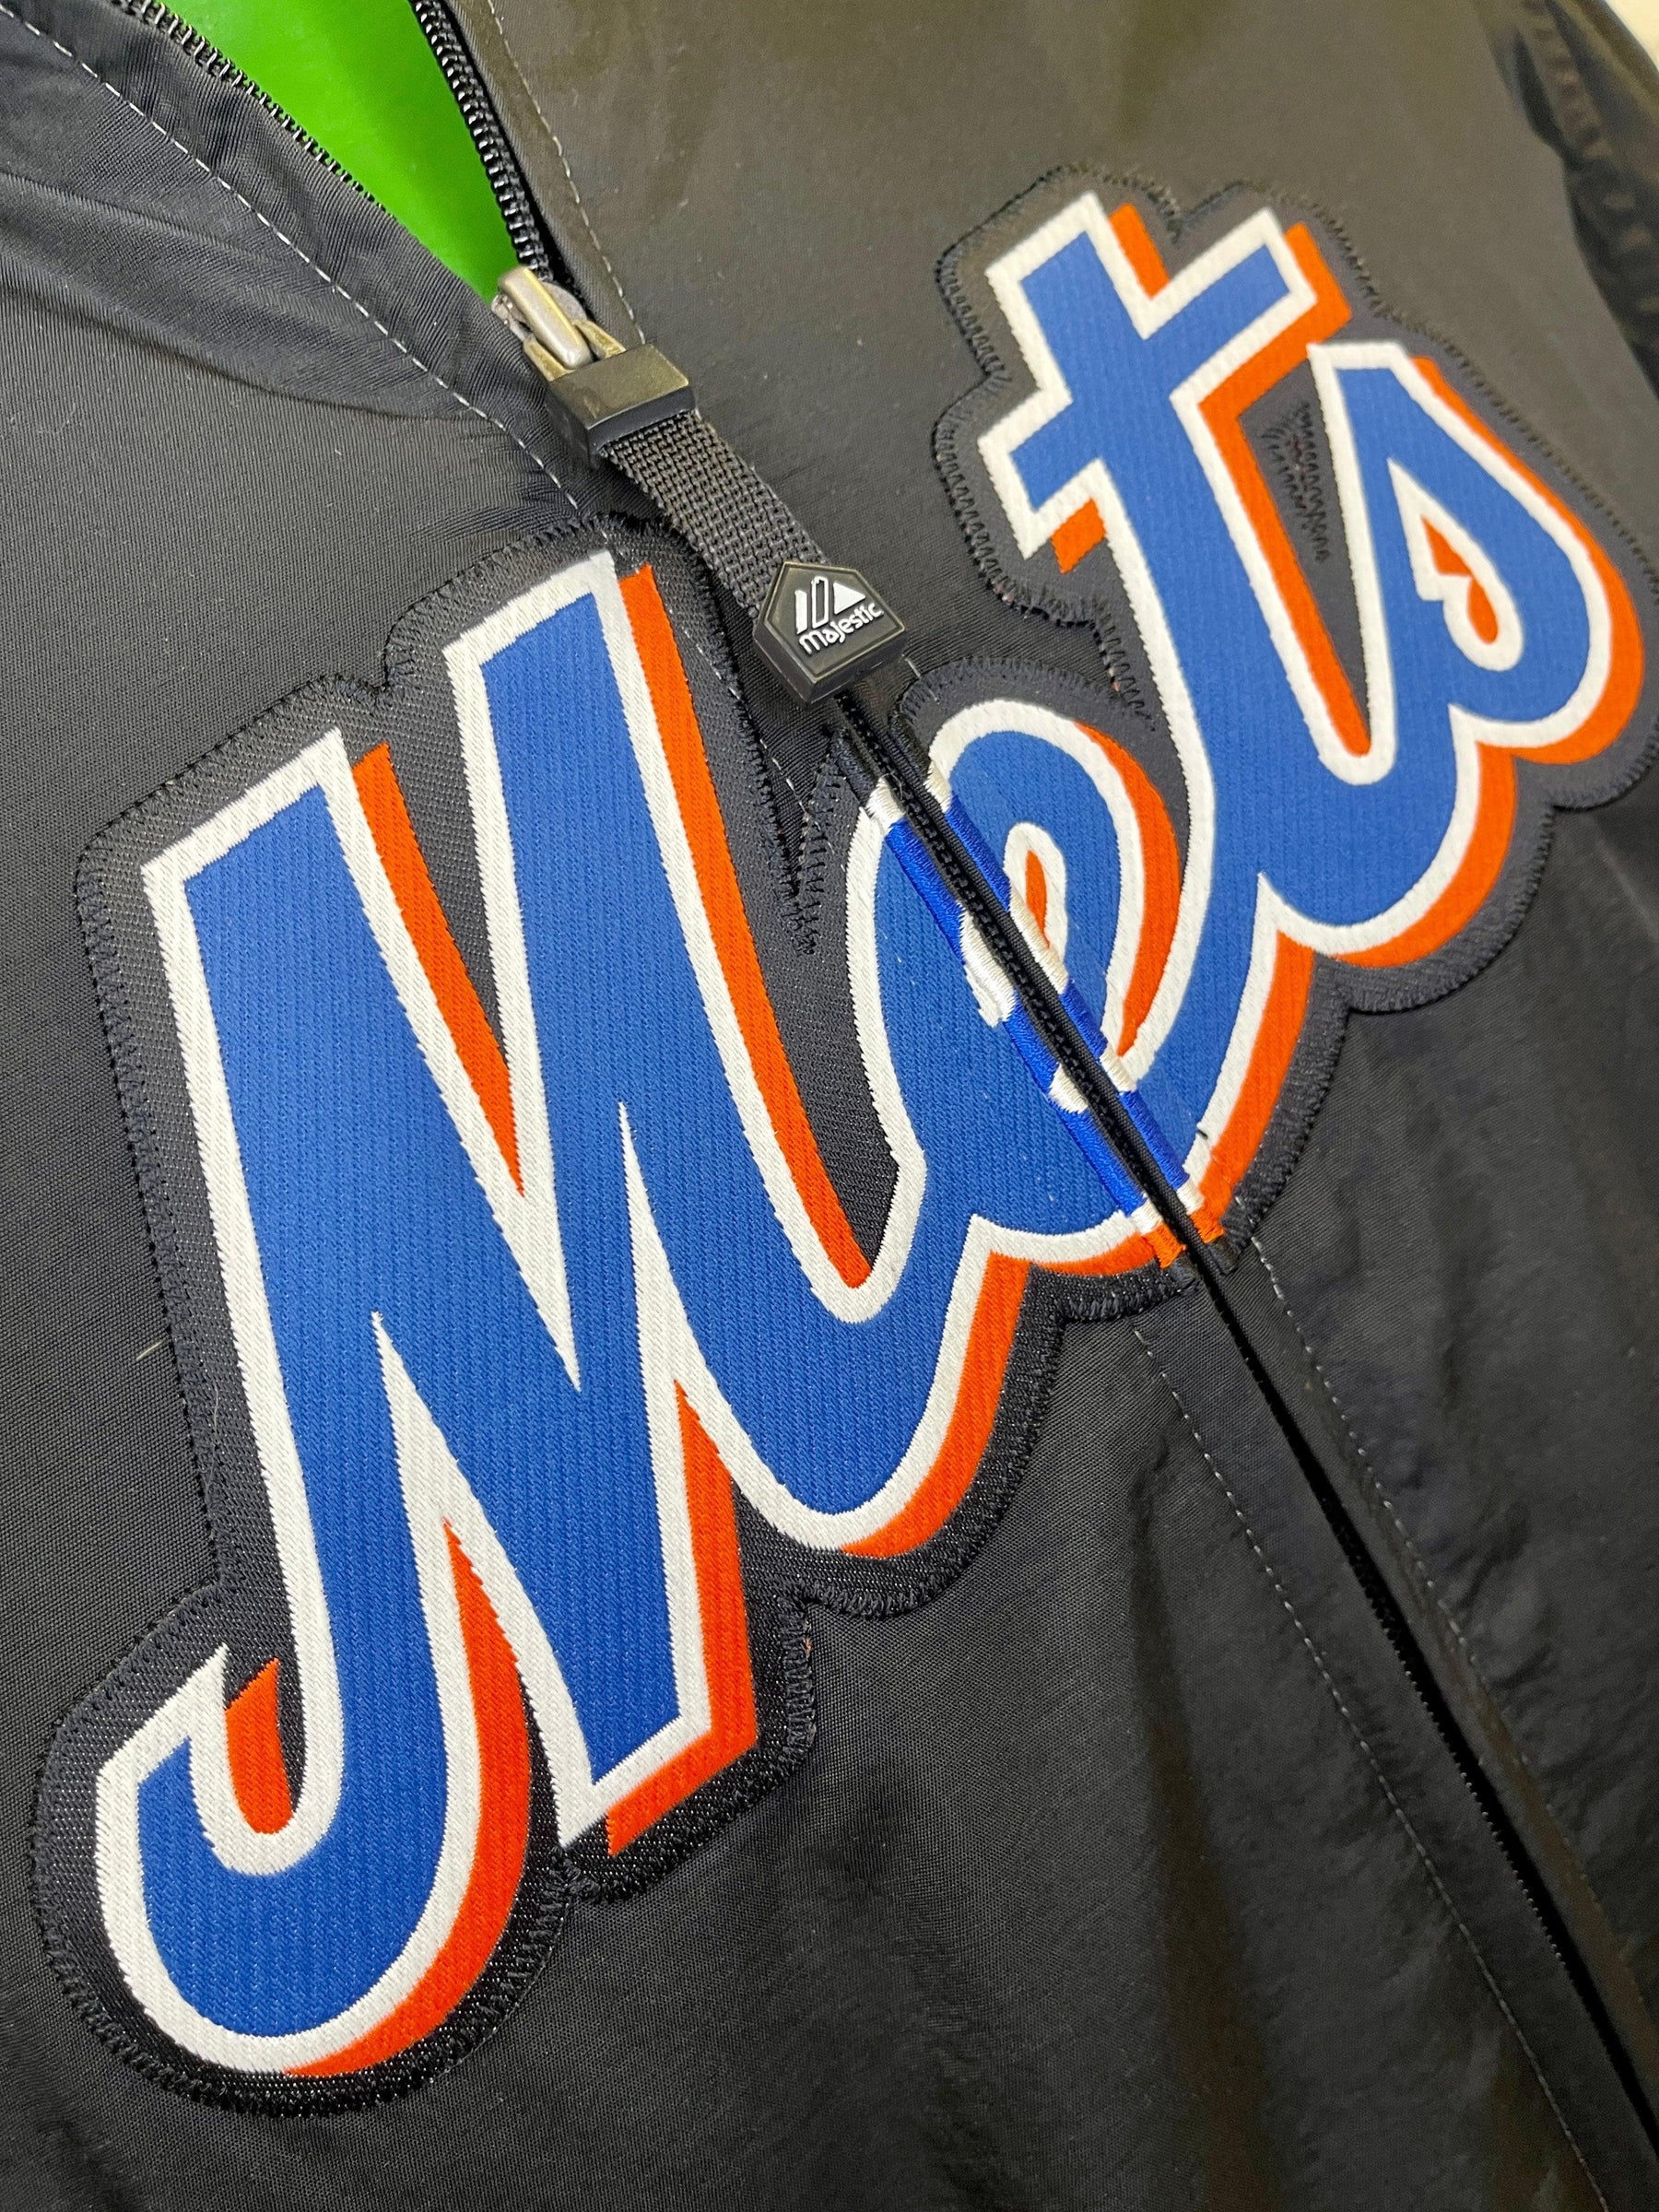 MLB New York Mets Majestic Fleece Lined Windbreaker Youth X-Large 18-20